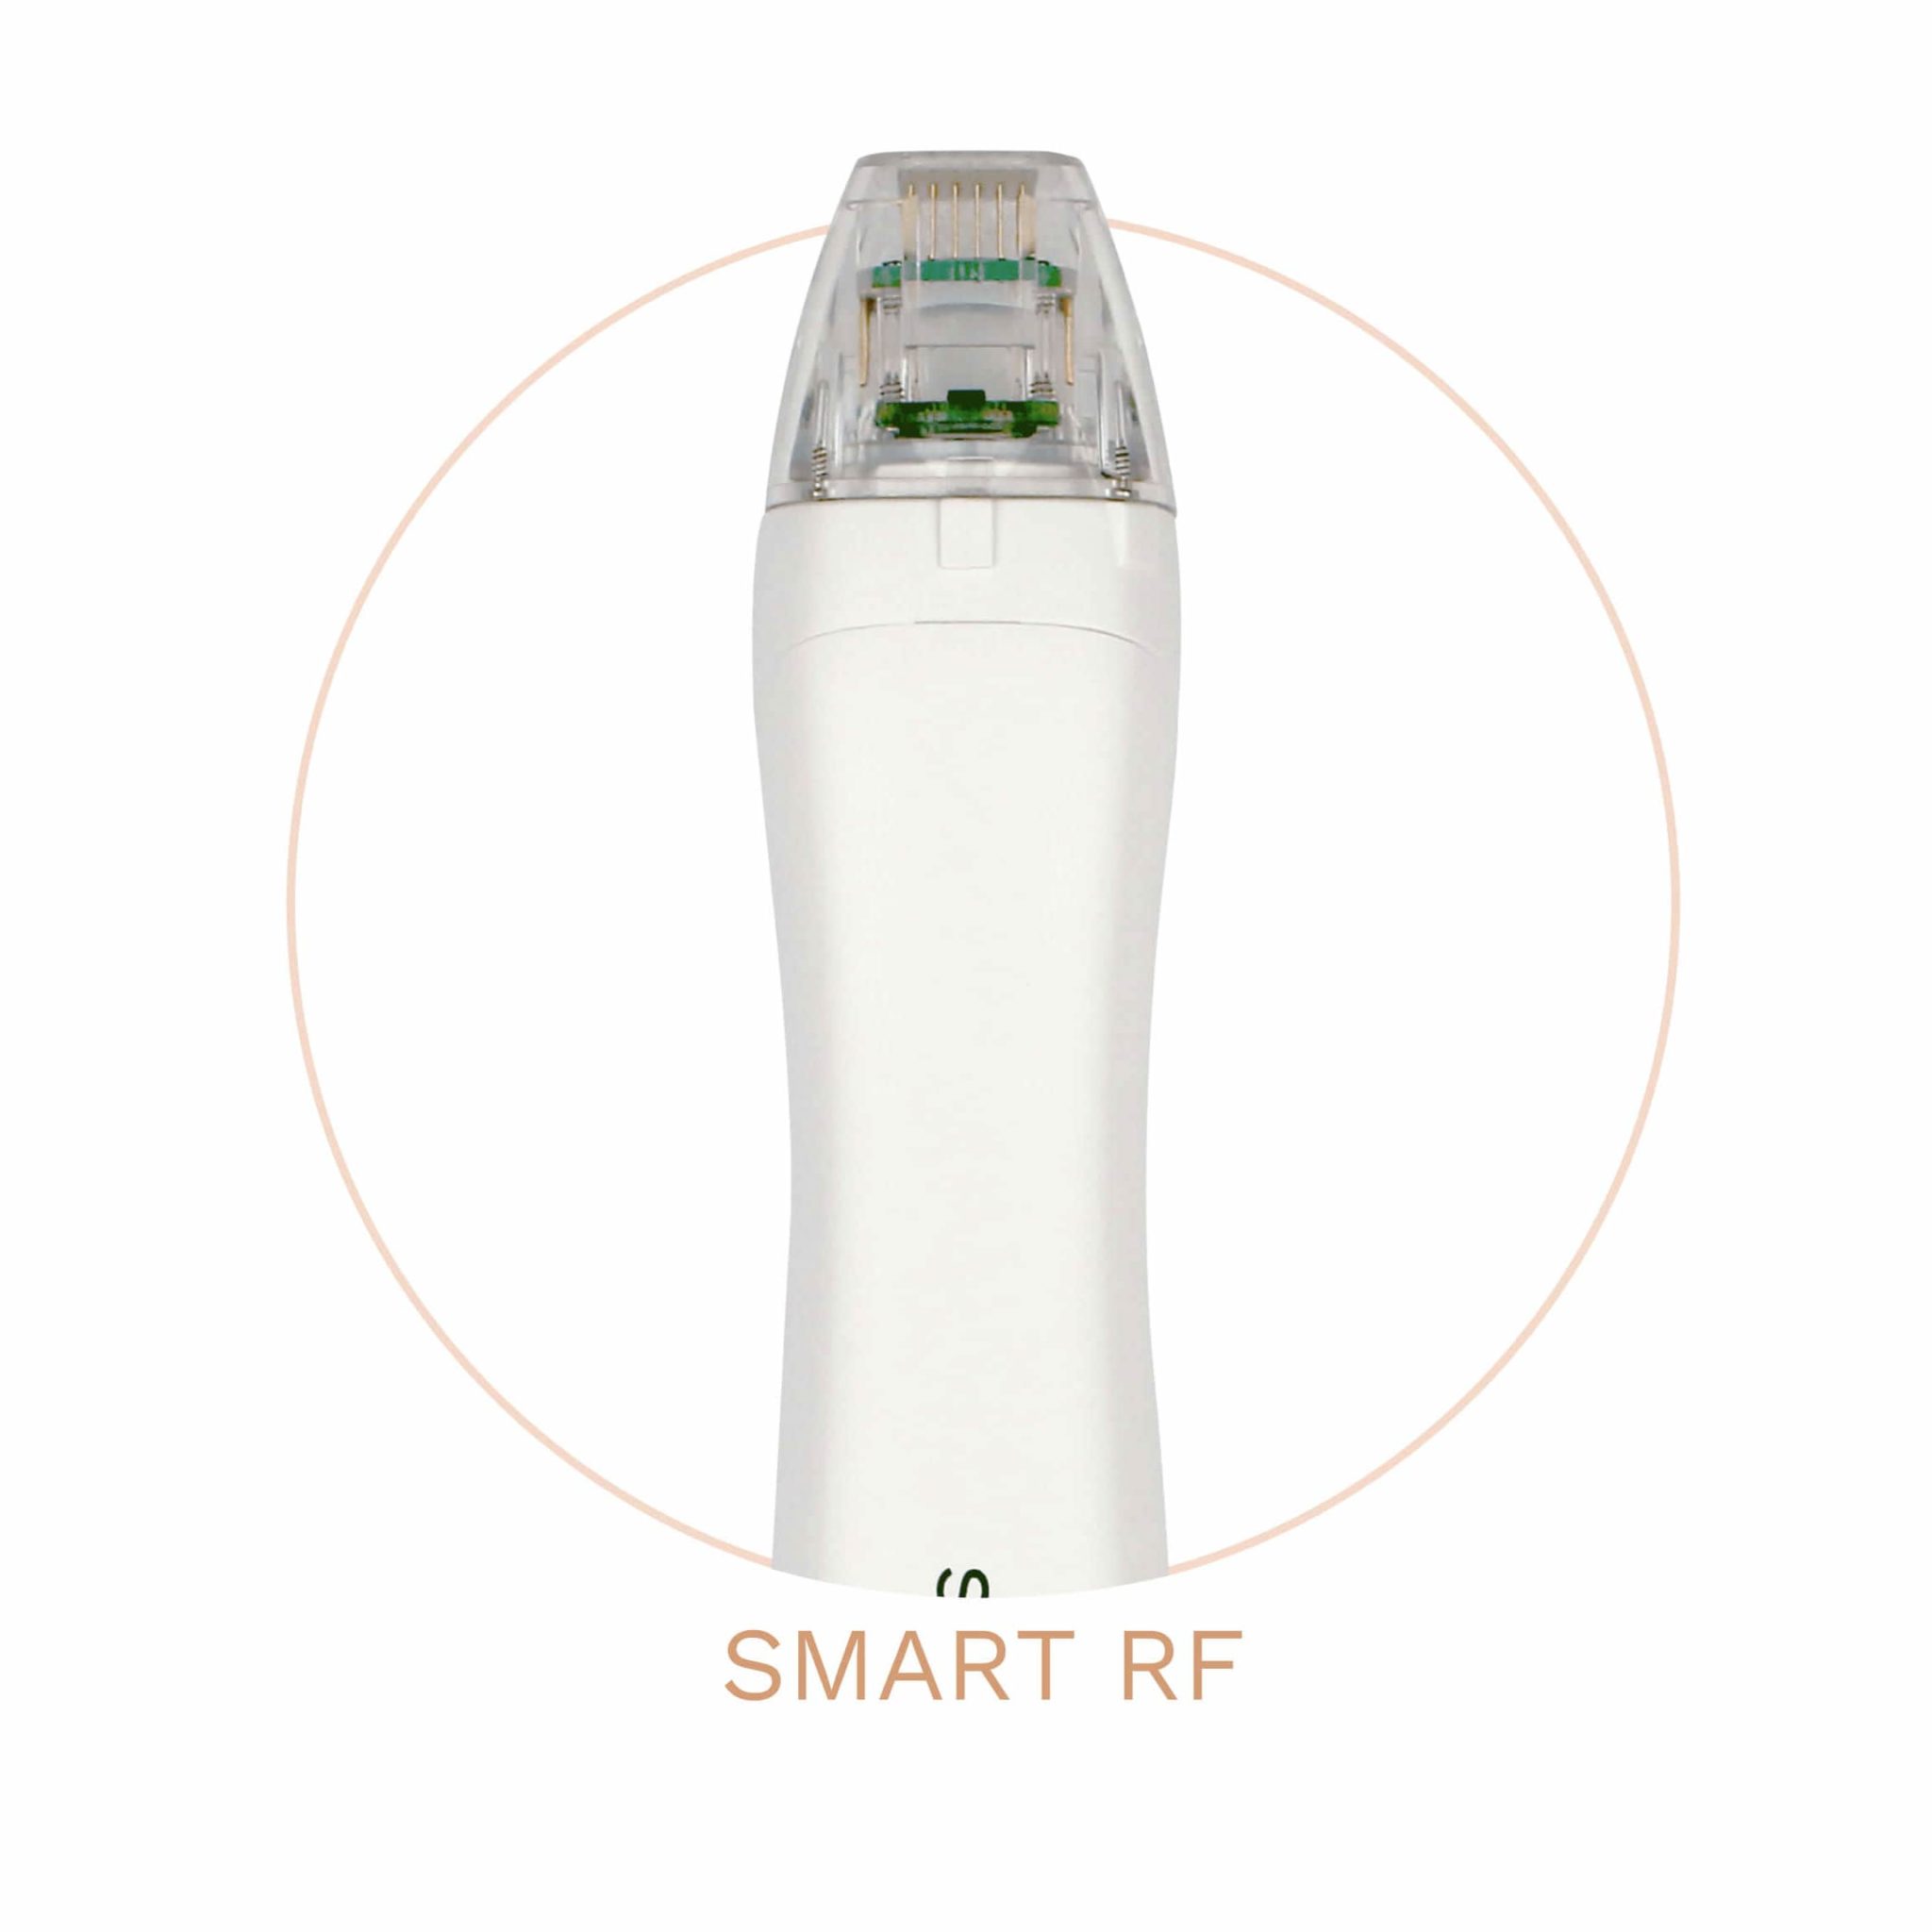 smart rf handpiece product shot